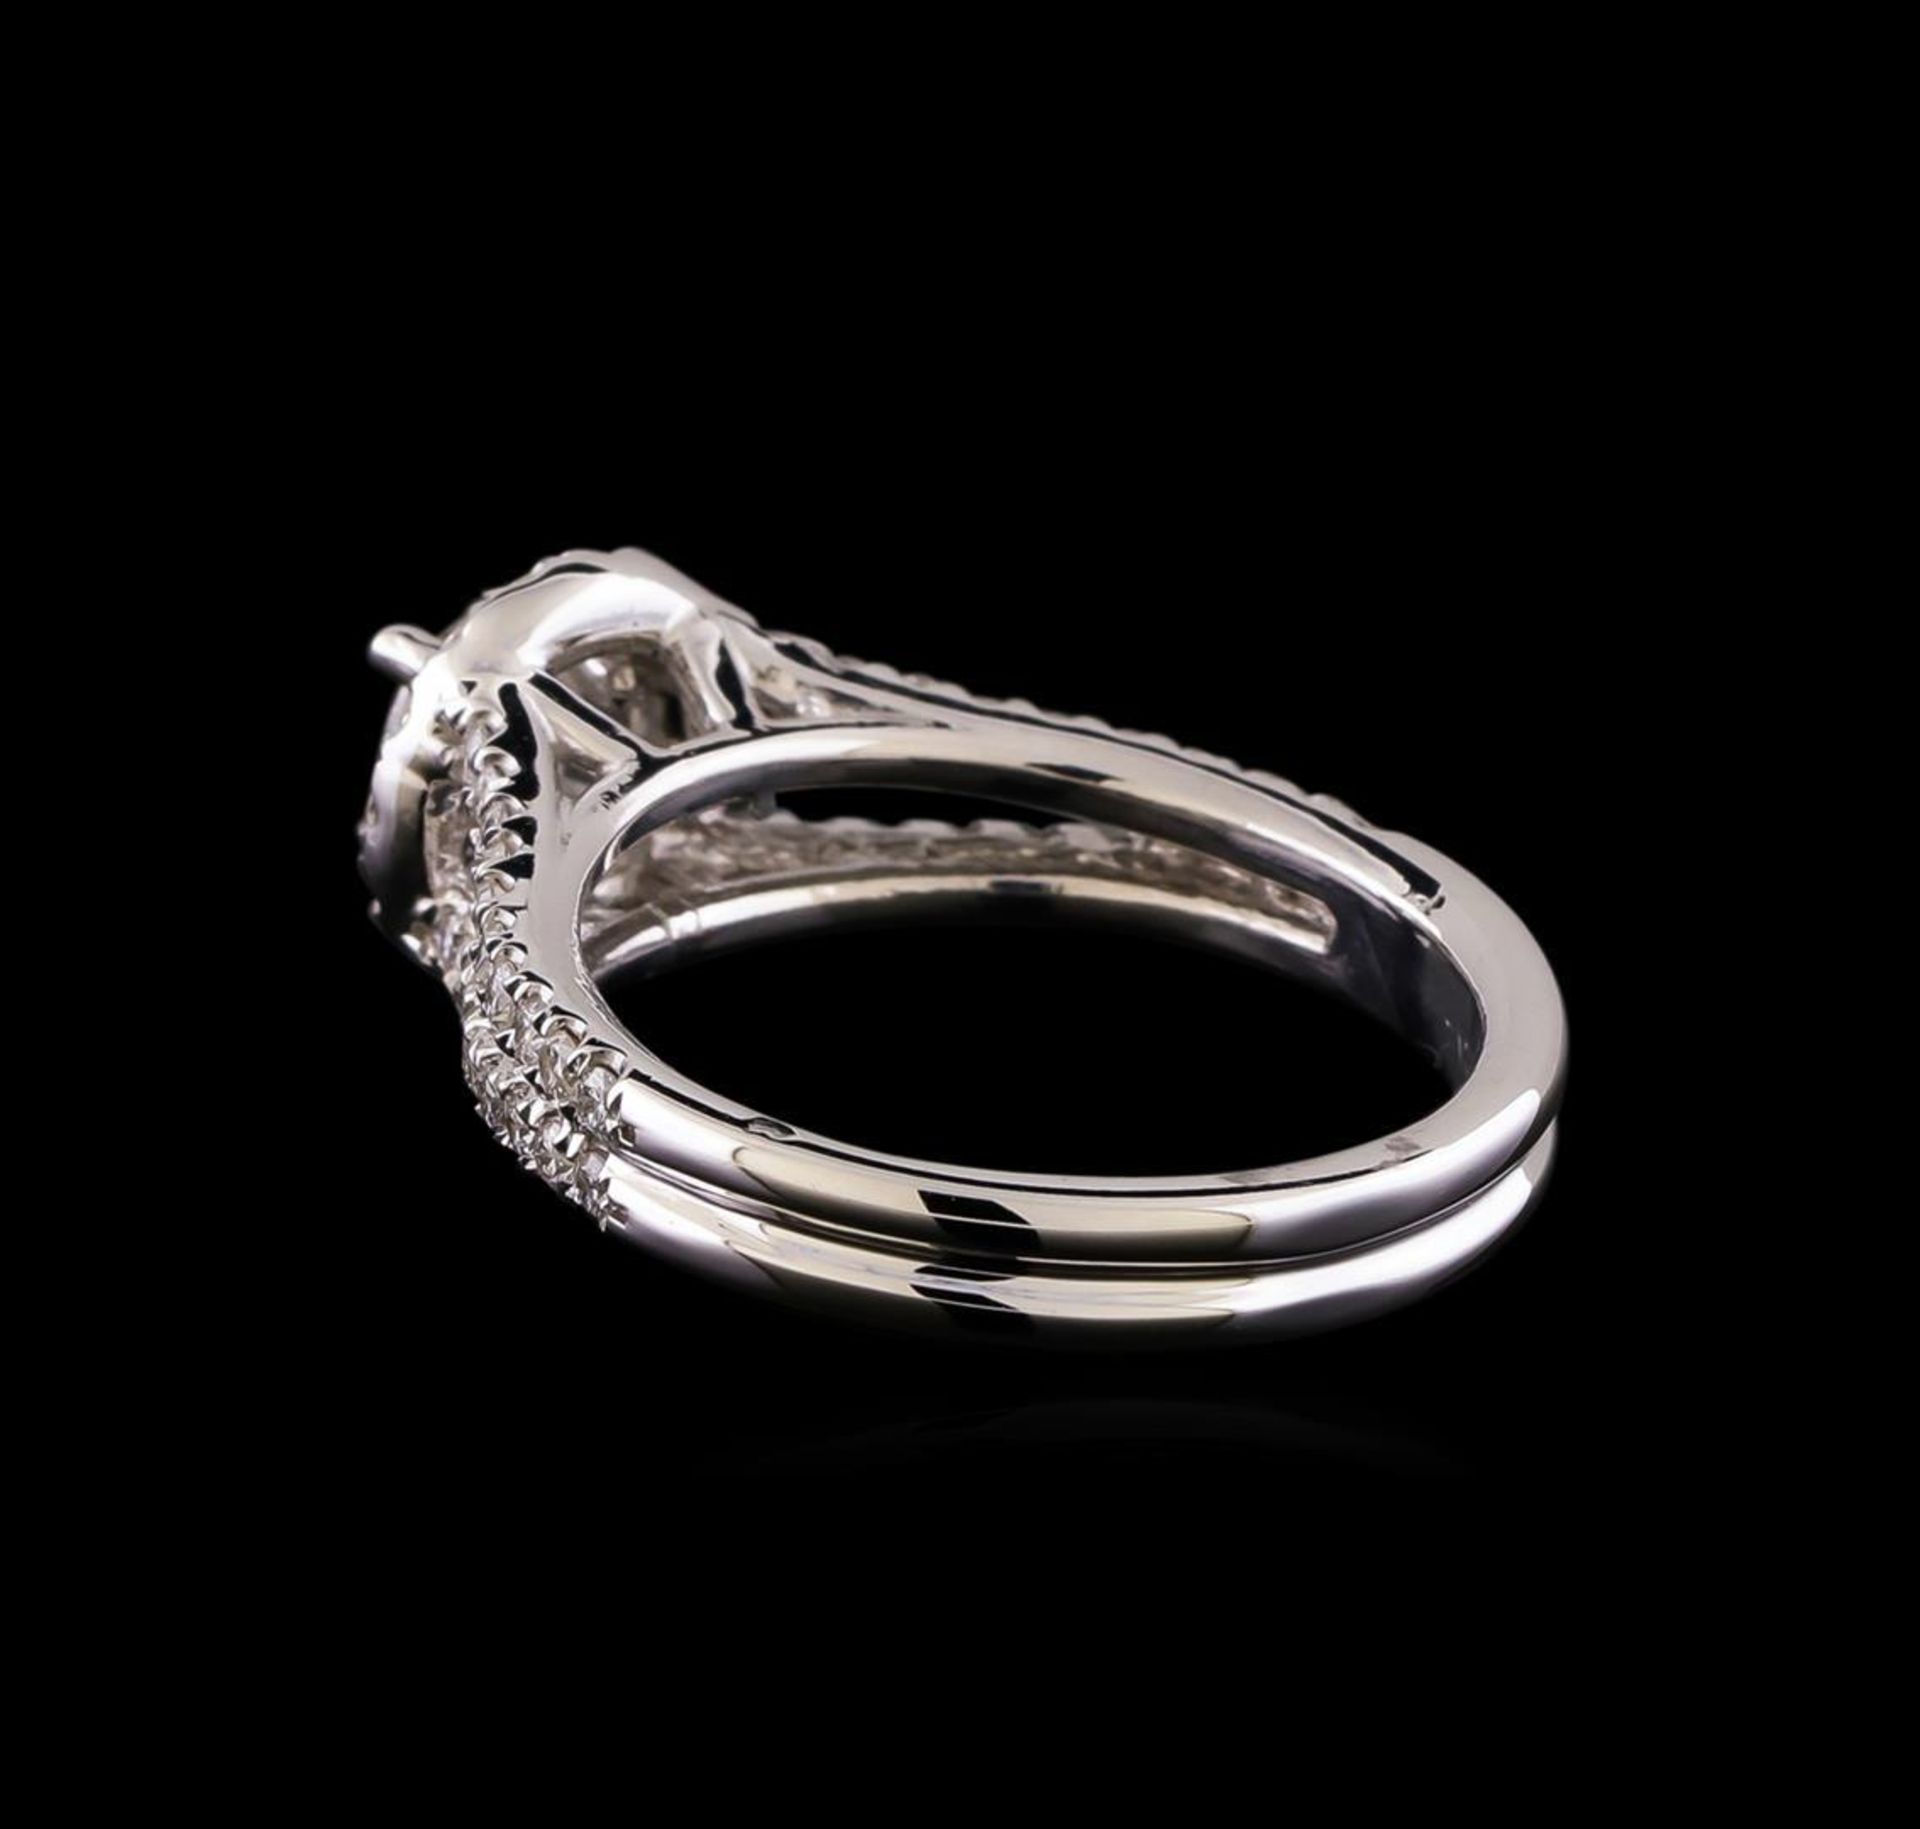 1.06 ctw Diamond Ring - 14KT White Gold - Image 3 of 5